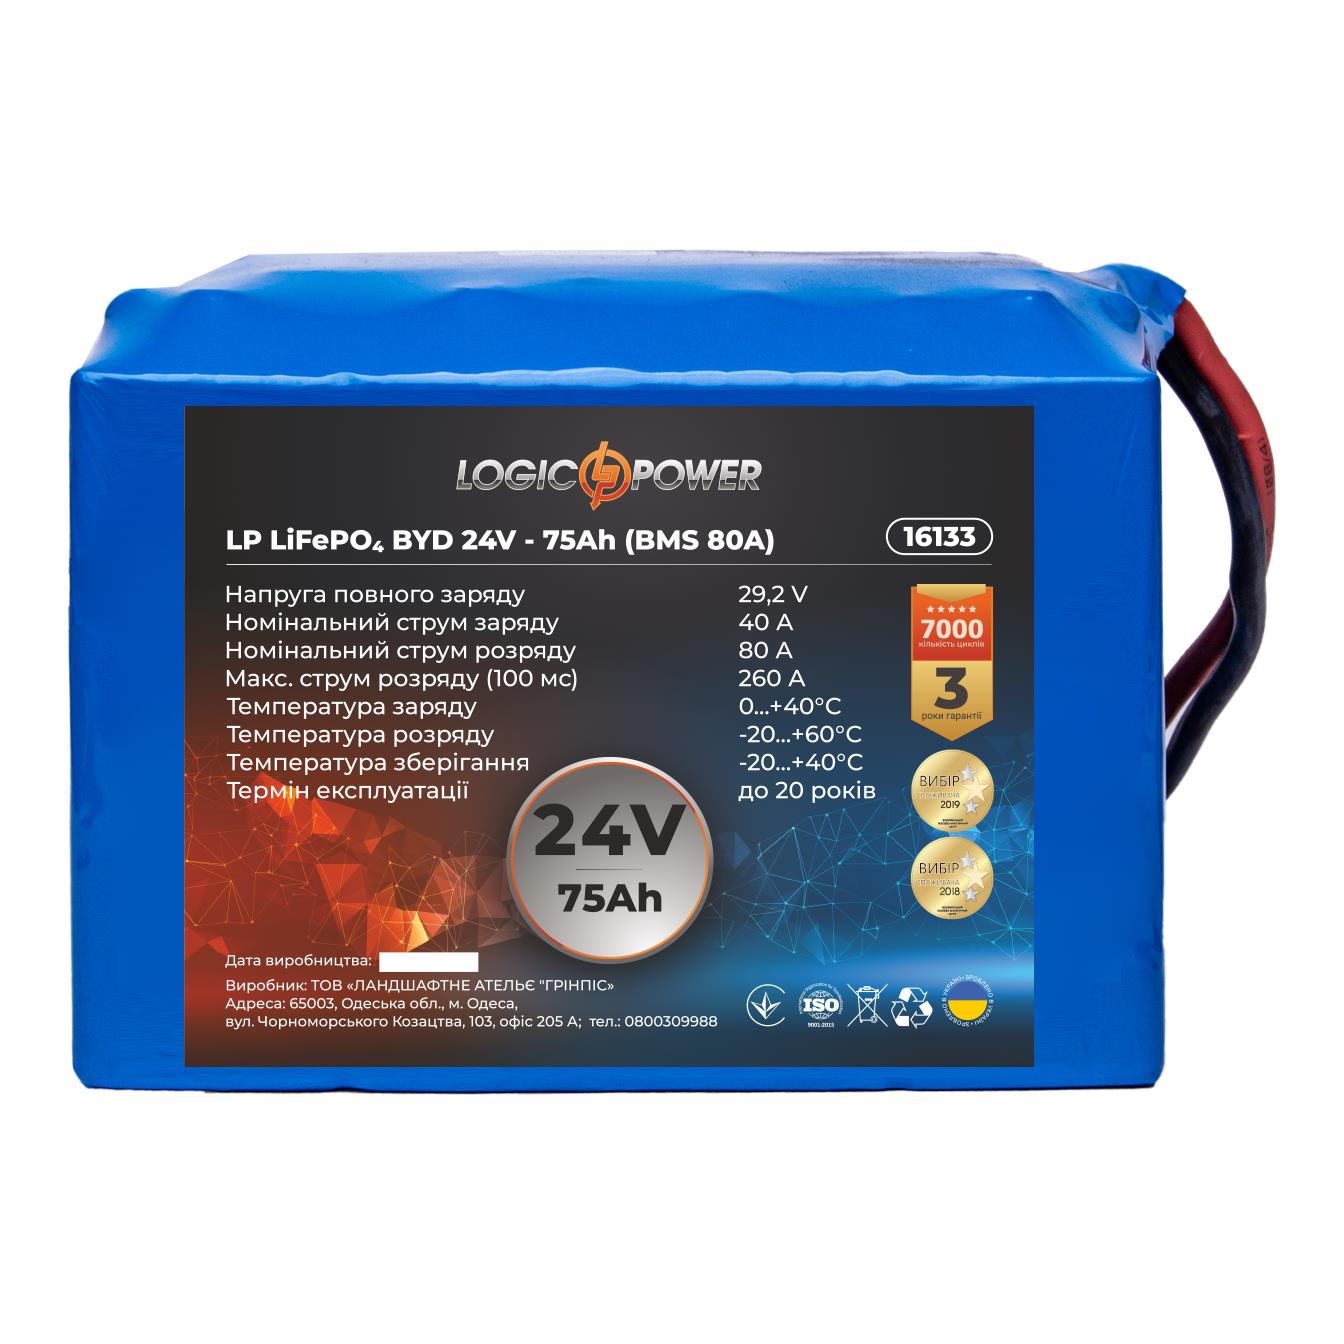 Акумулятор літій-залізо-фосфатний LogicPower LP LiFePO4 BYD 24V - 75 Ah (BMS 80A) (16133)